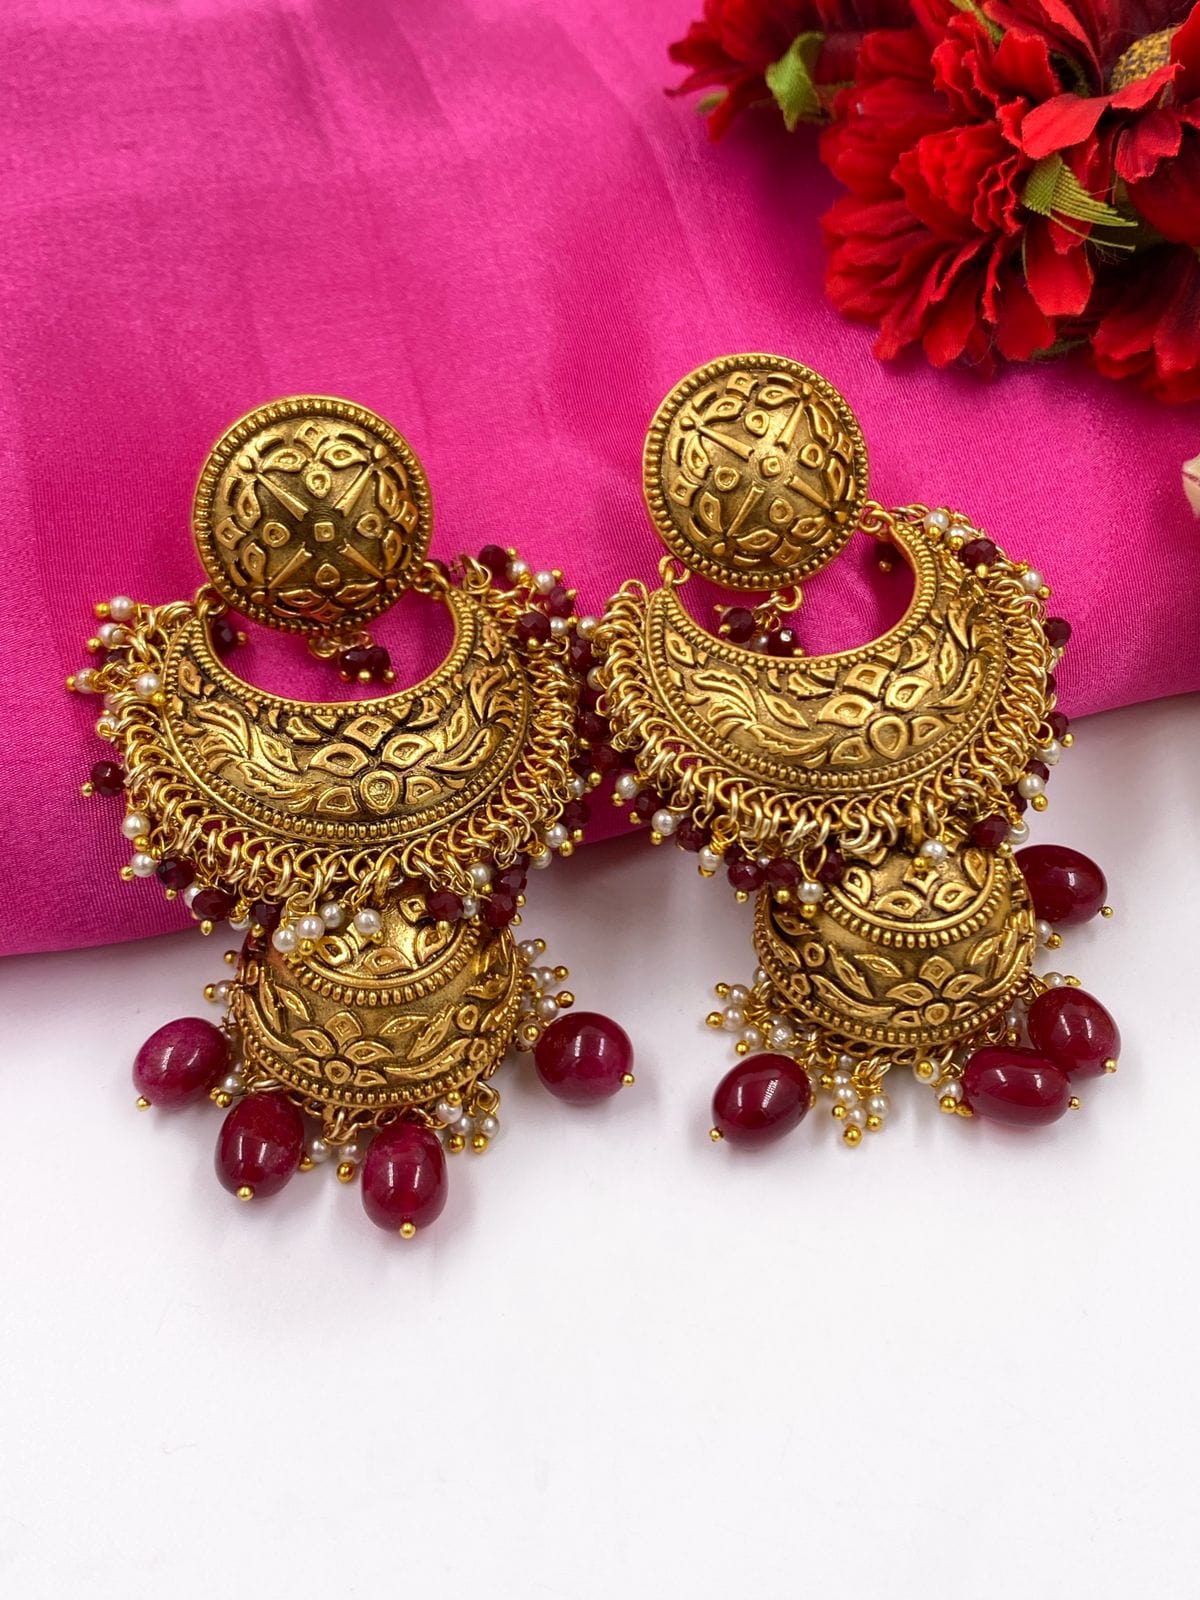 Handmade Gold Polished Semi Precious Stone Hoop Earrings-E5-009 | eBay